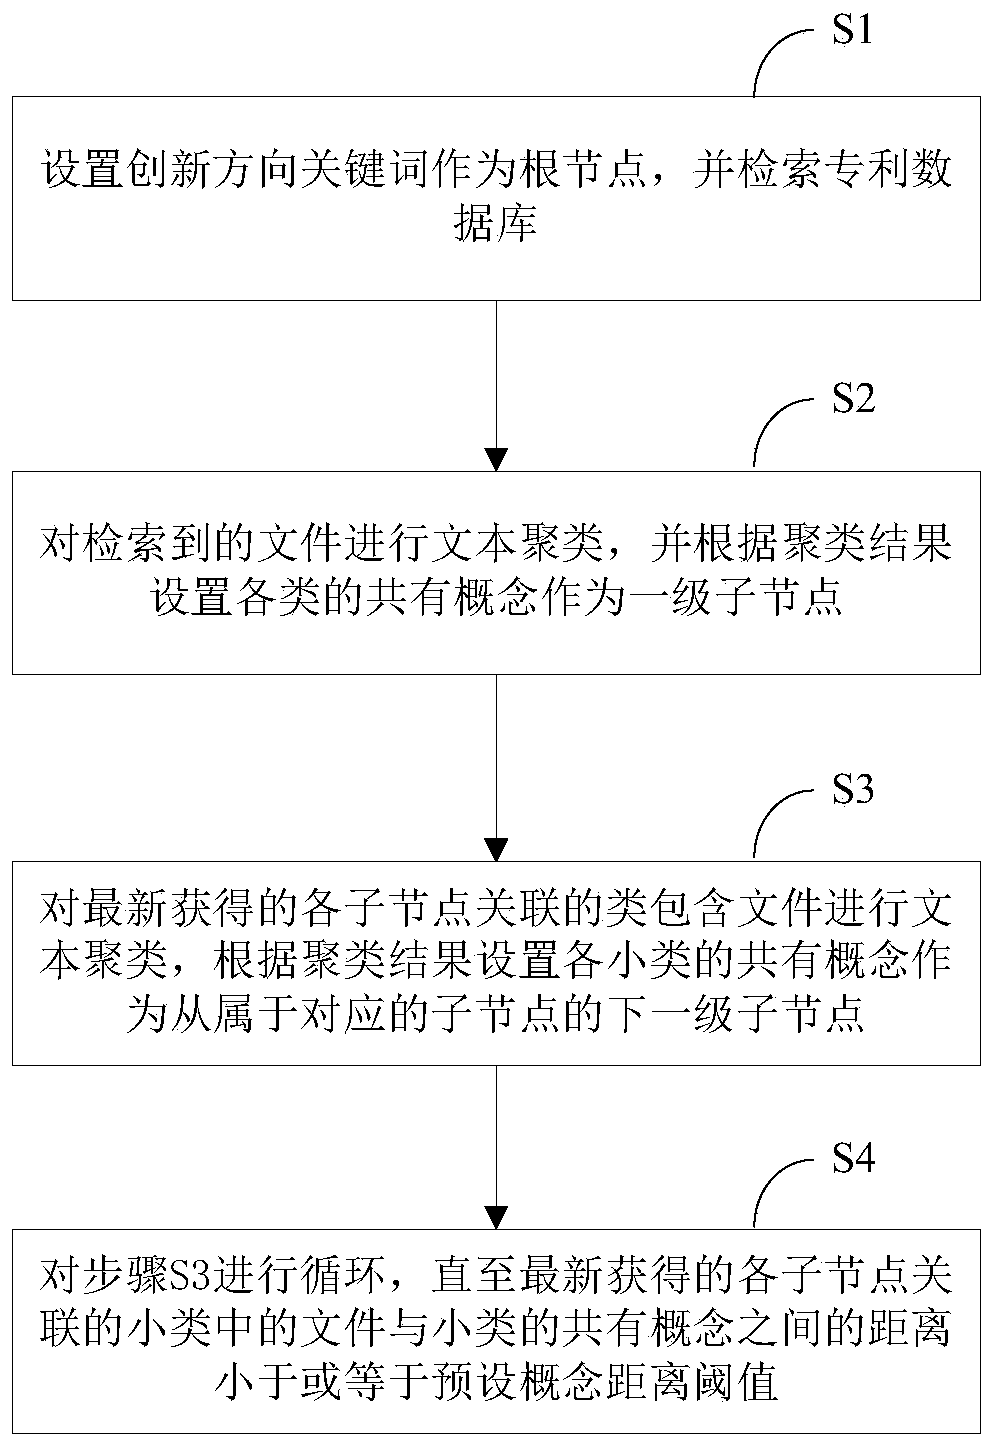 Patent display method based on innovation direction tree